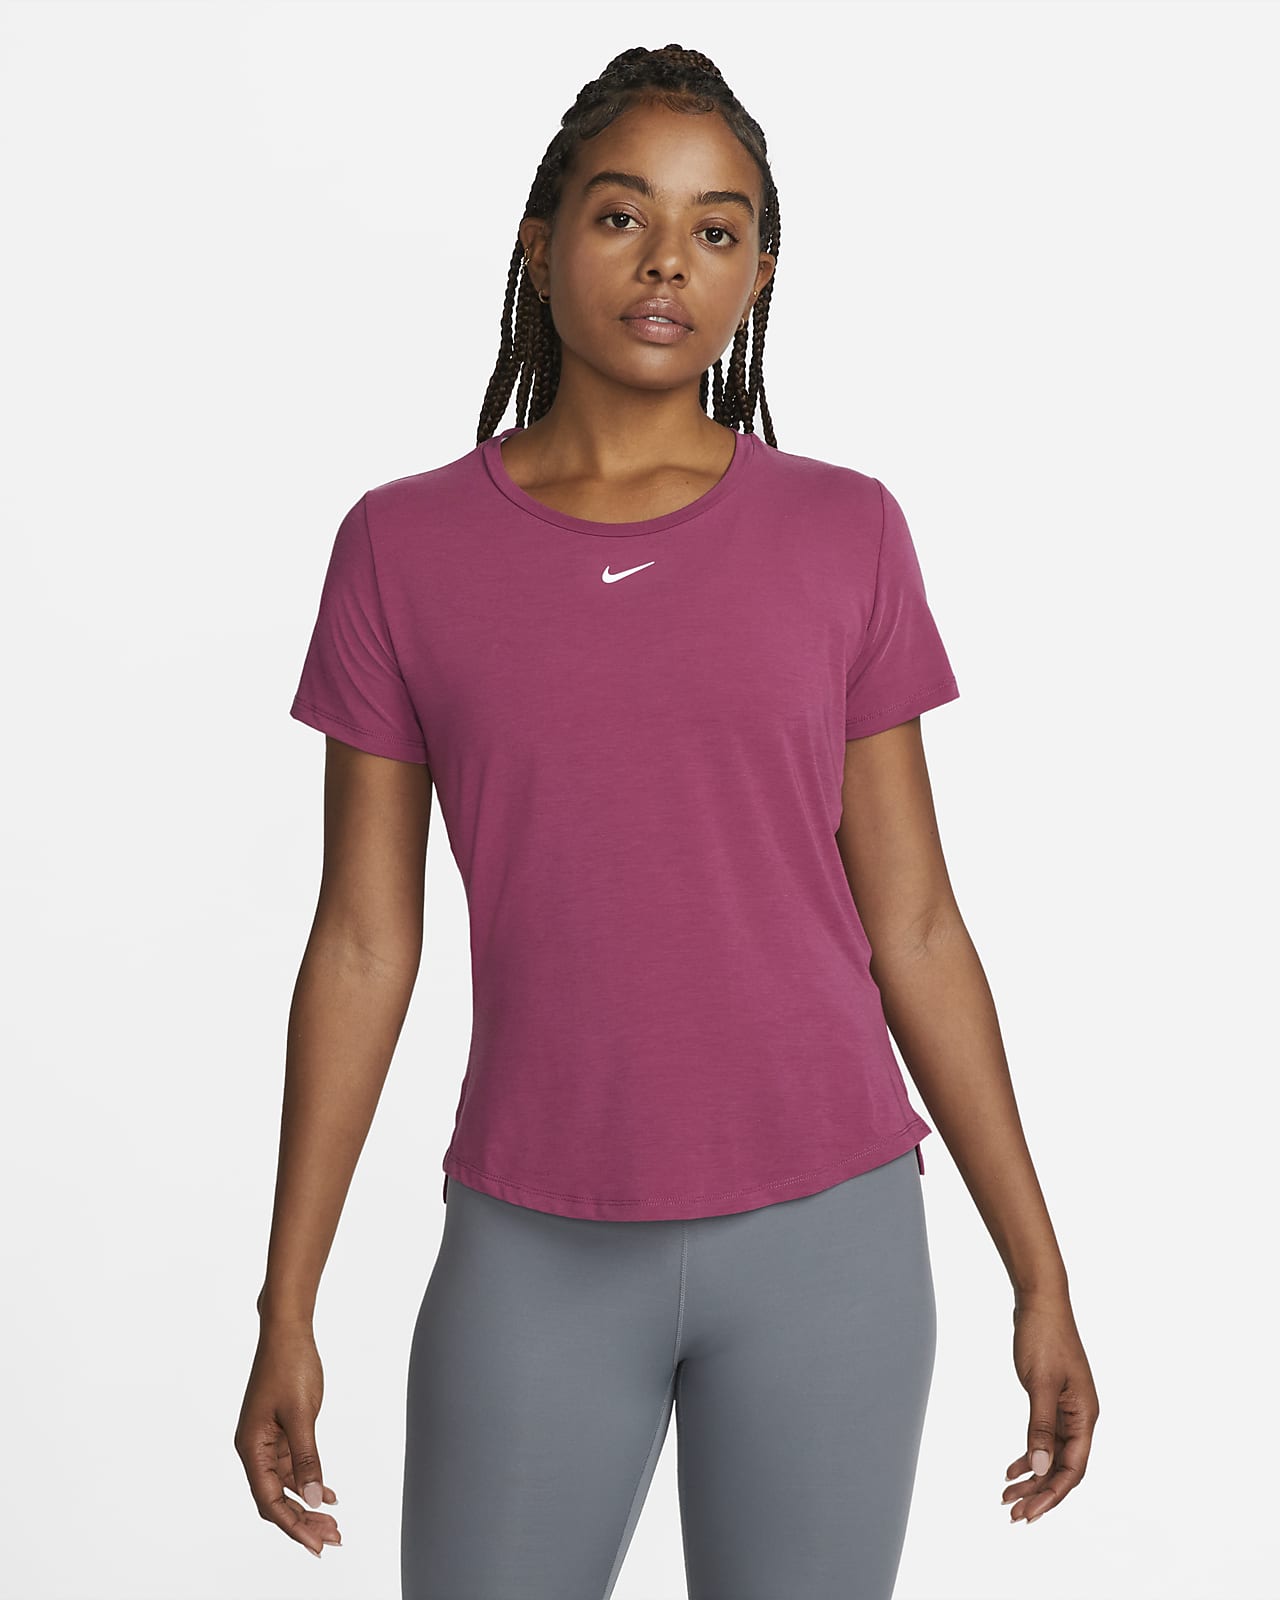 Nike Dri-FIT UV One Luxe Women's Standard Fit Short-Sleeve Top. Nike HR